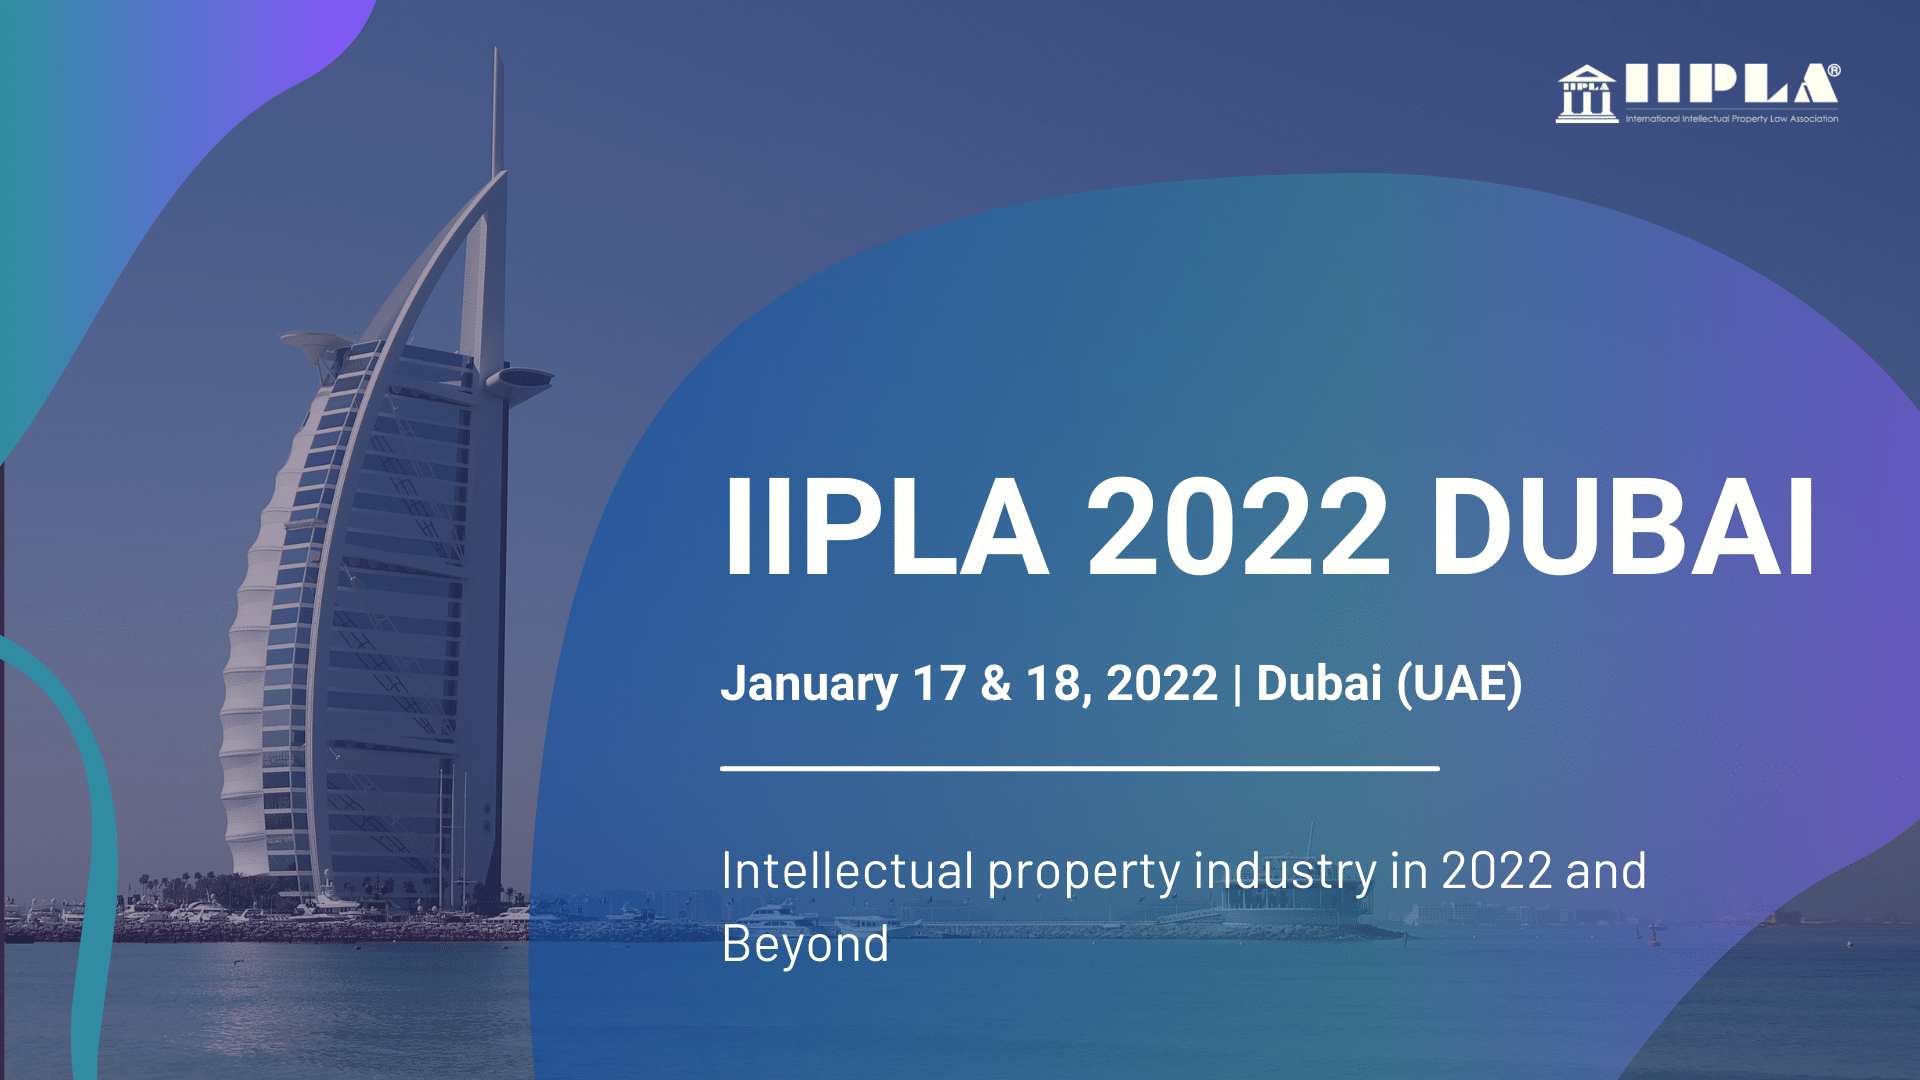 IIPLA Dubai Conference in 2022